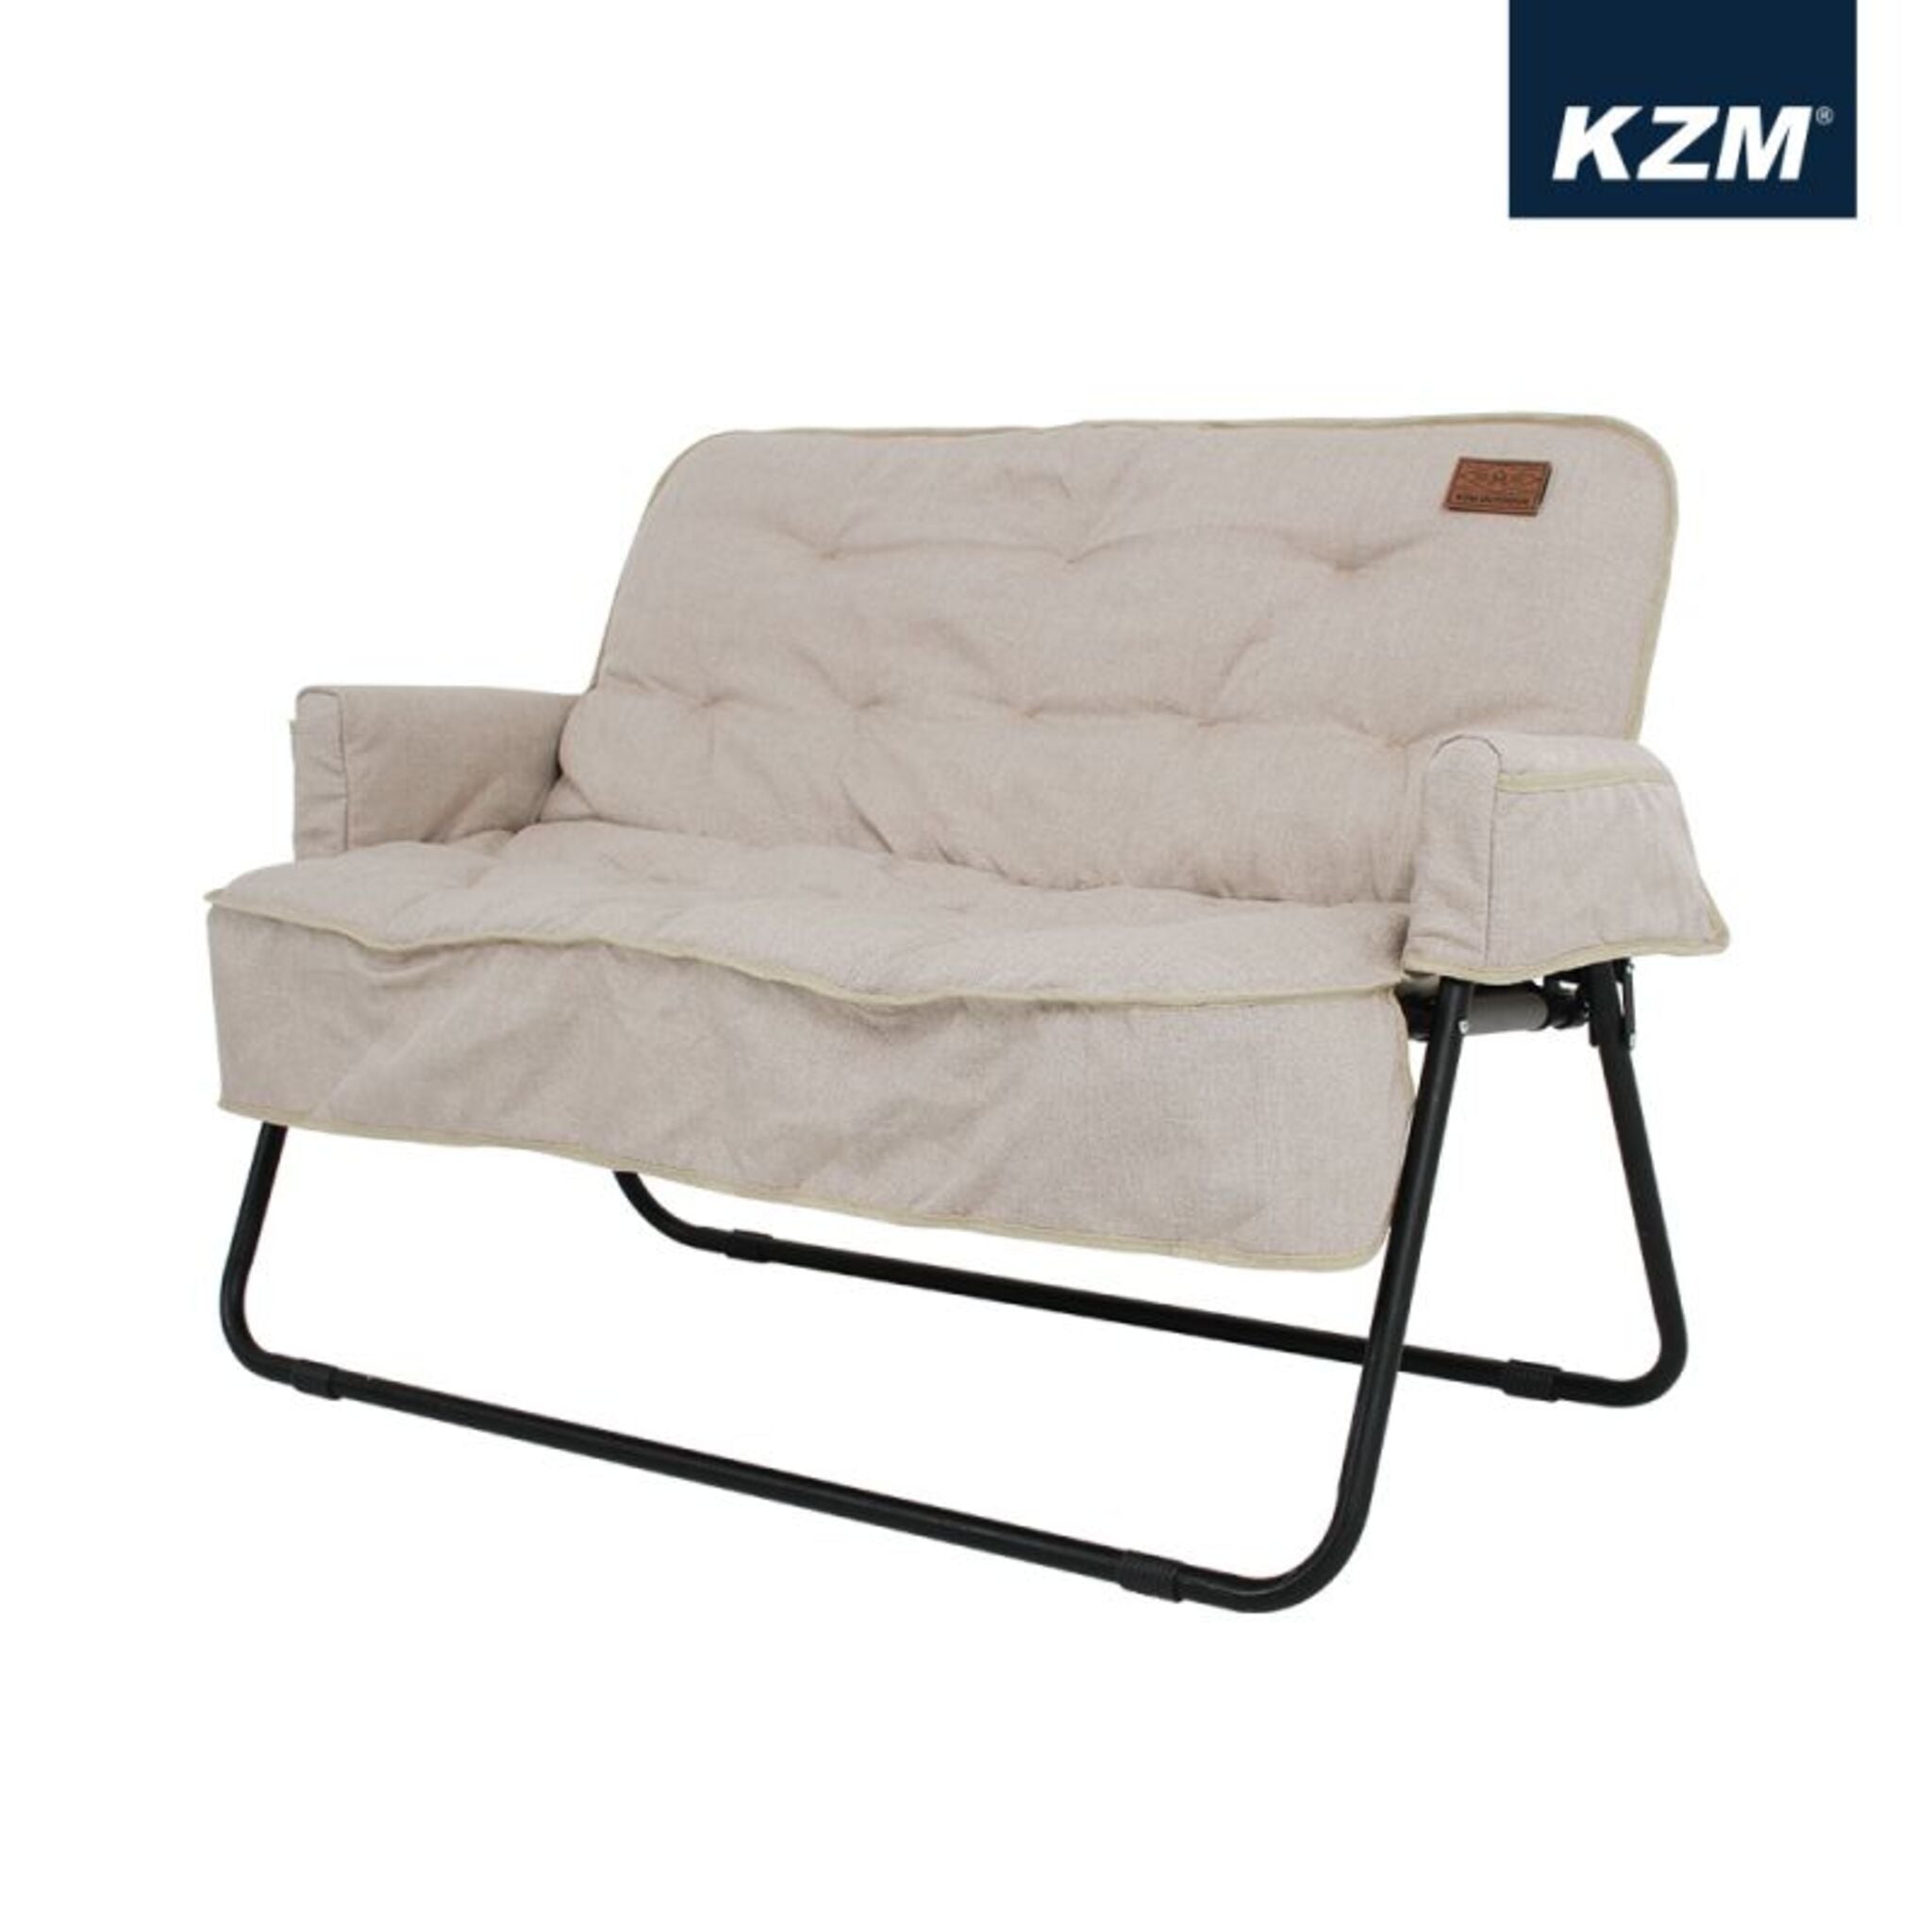 KAZMI KZM 素面雙人折疊椅專用布套/椅套 K20T1C015